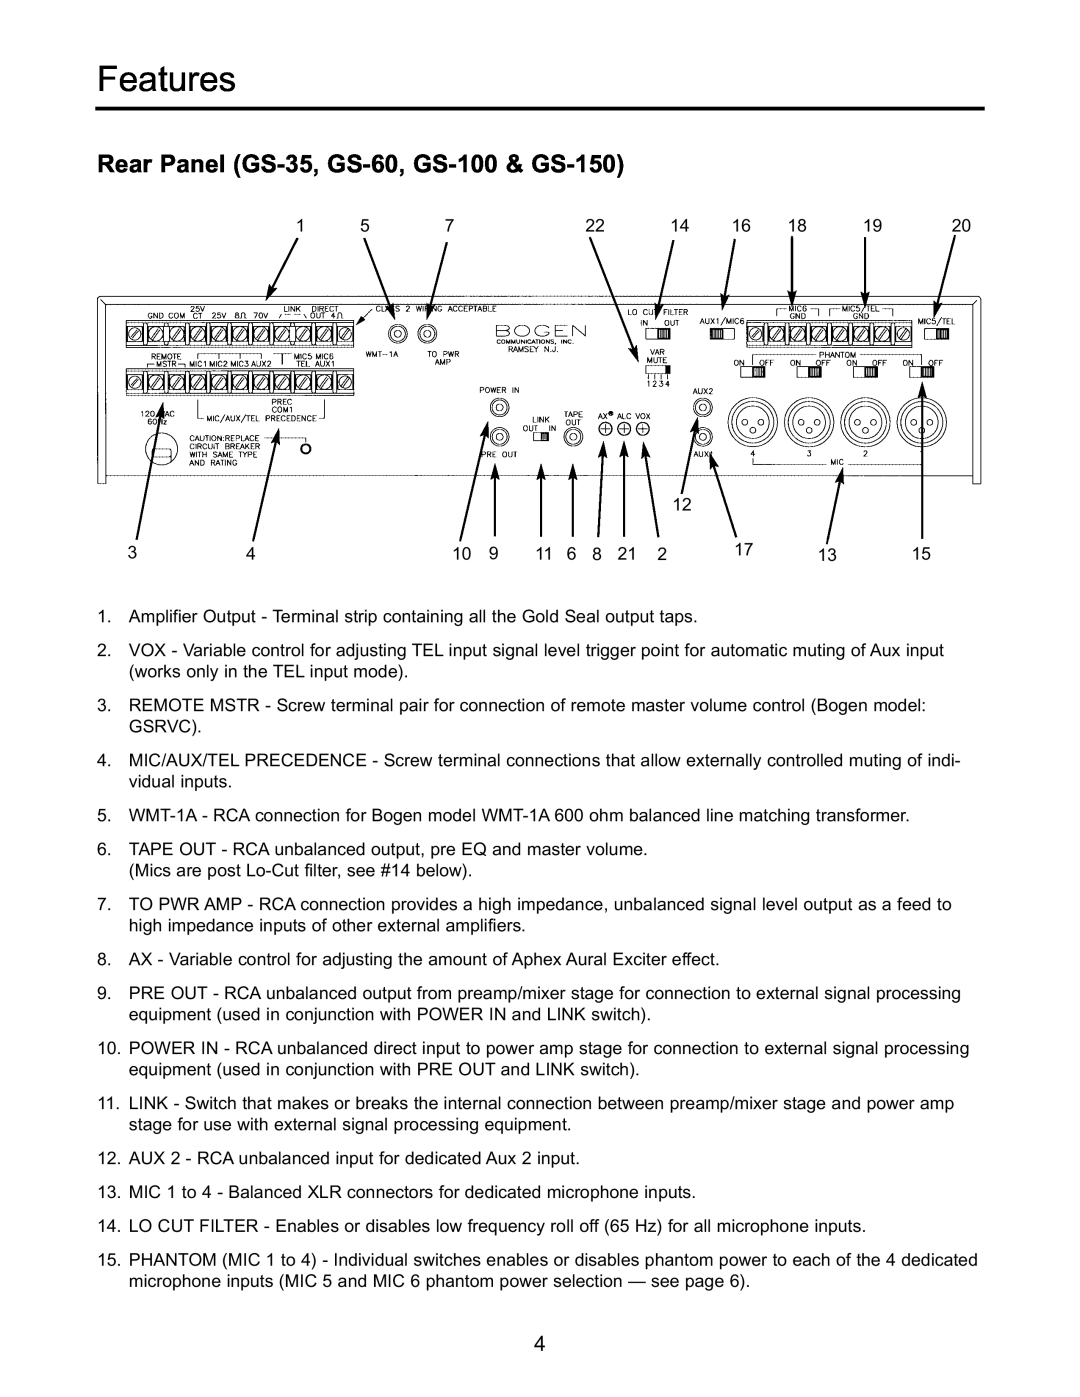 Bogen GS-250 manual Rear Panel GS-35, GS-60, GS-100& GS-150, Features 